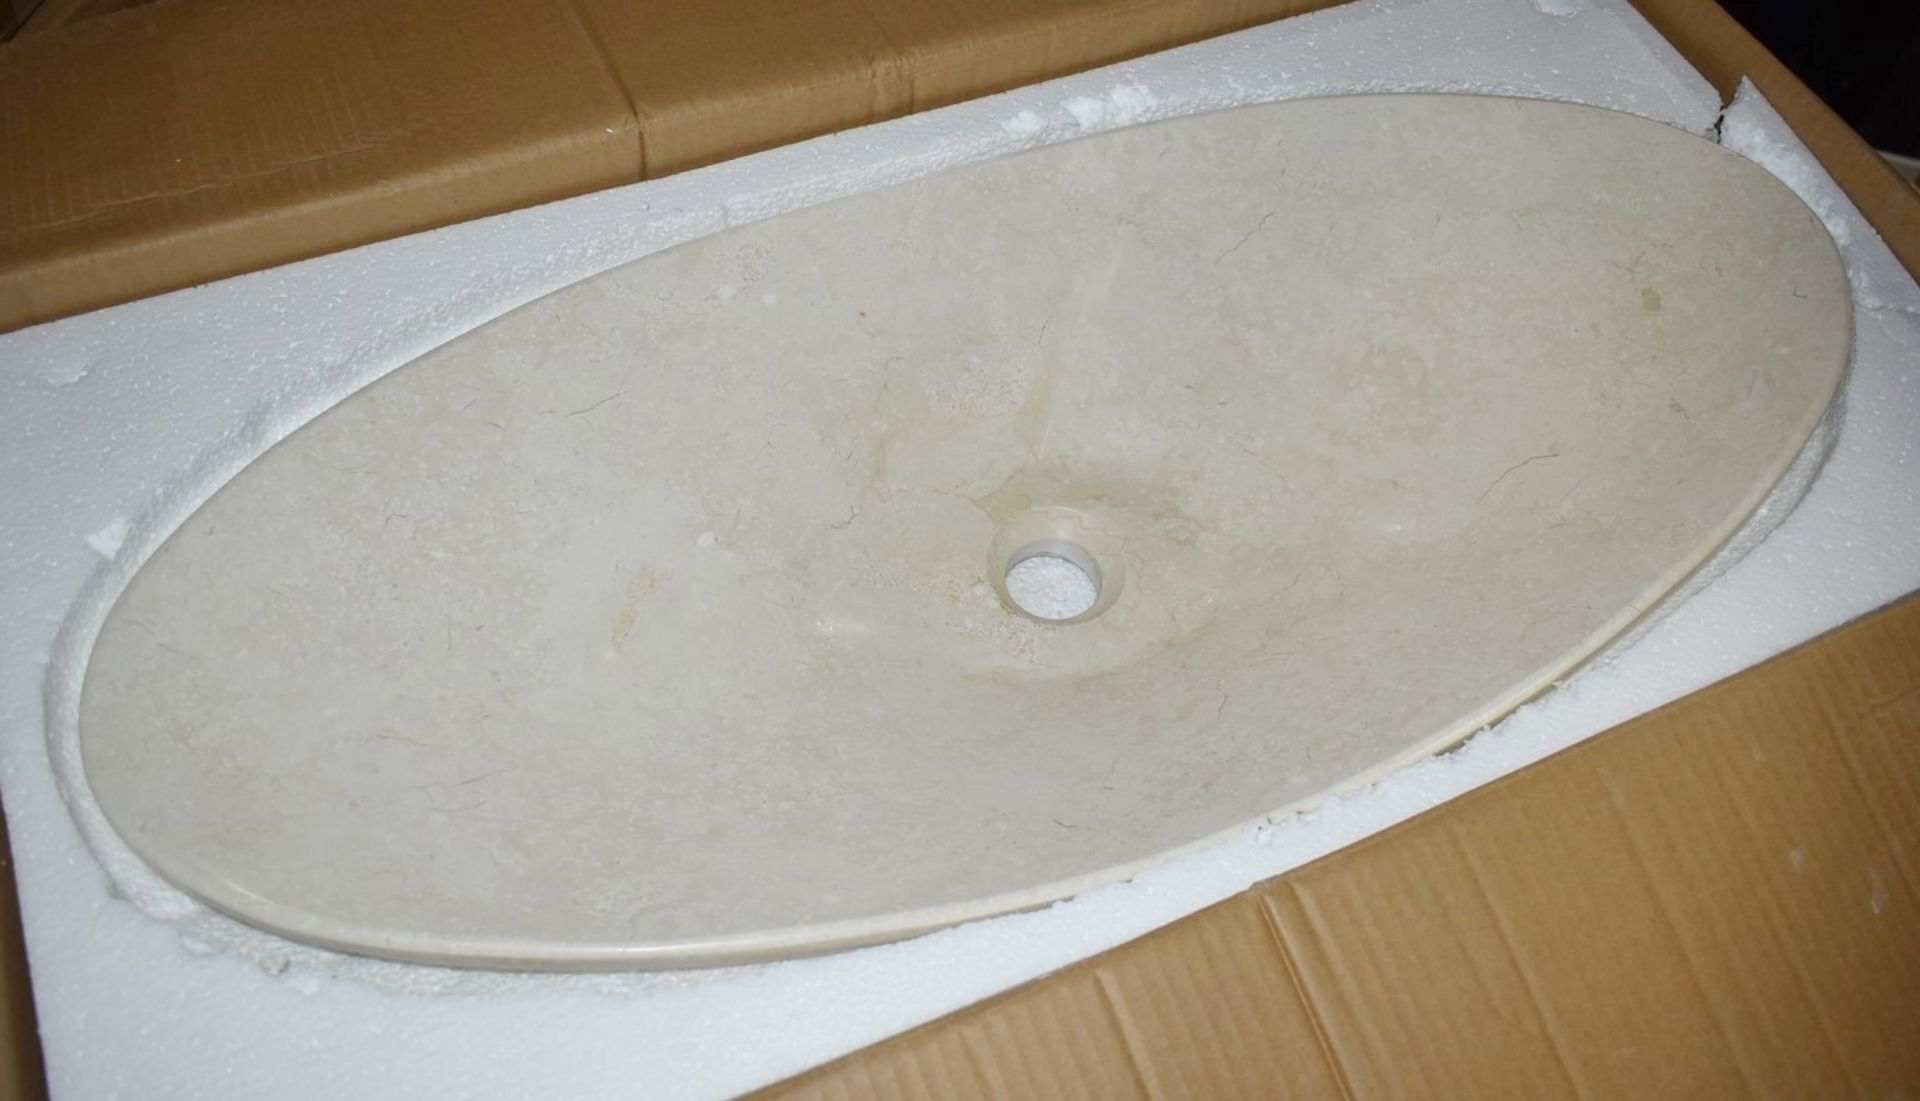 1 x Stonearth 'Cyra' Black Galala Marble Stone Countertop Sink Basin - New Boxed Stock - RRP £ - Image 3 of 7